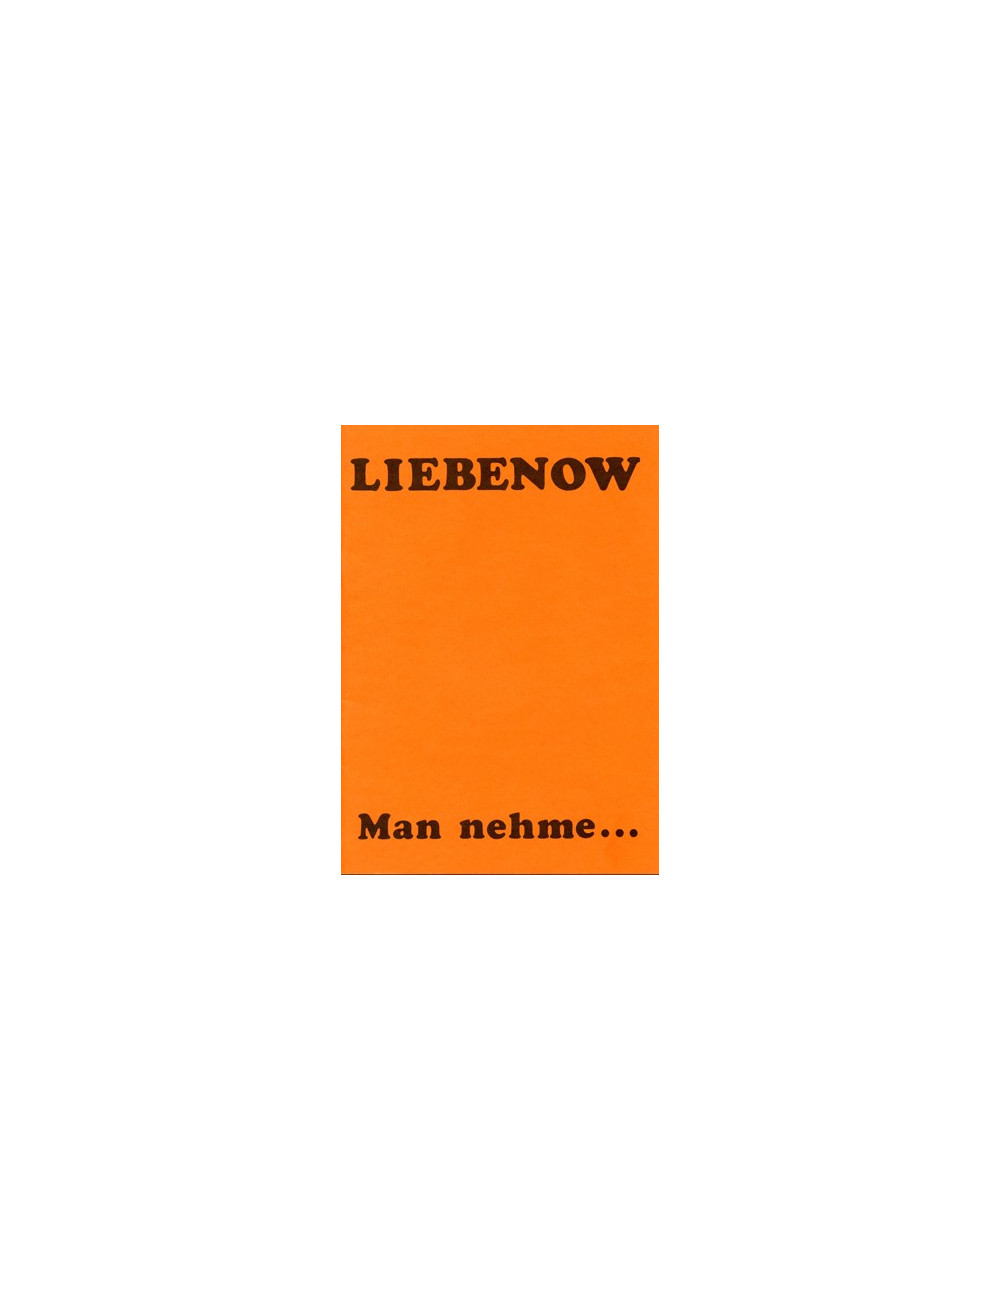 LIEBENOW – MAN NEHME...